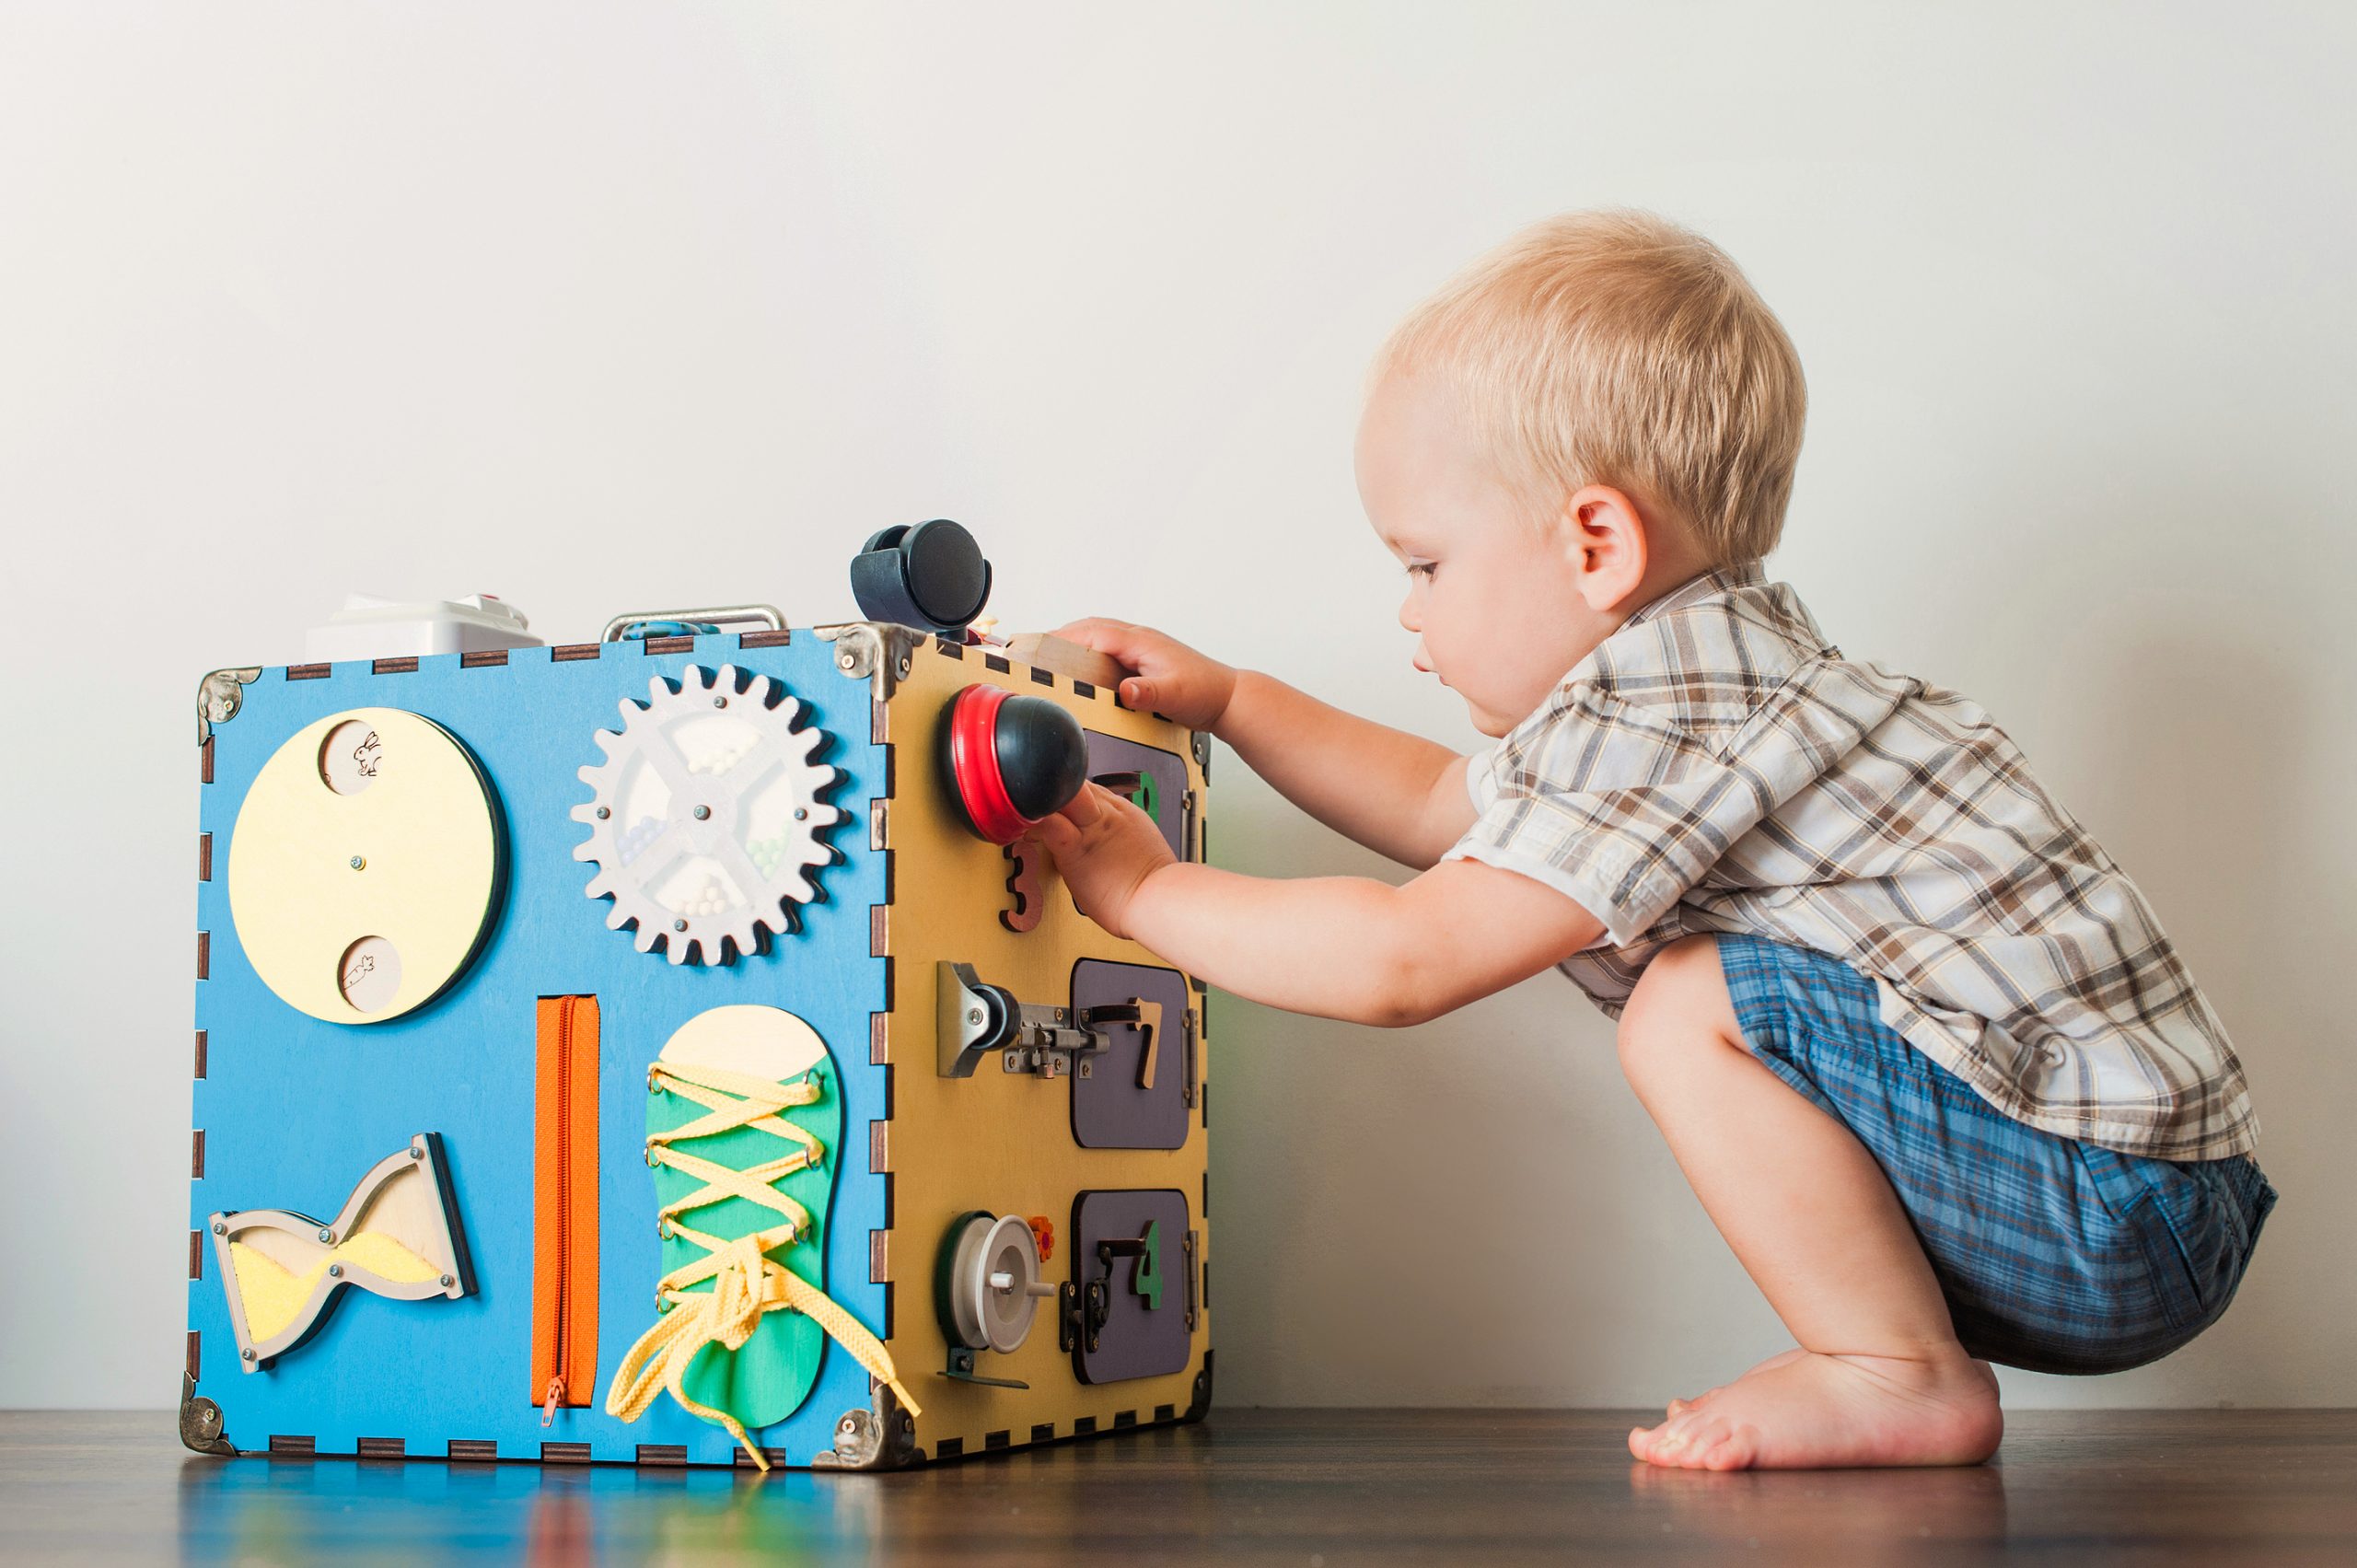 Juegos para bebés de 6 meses Archivos - Blog de juguetes